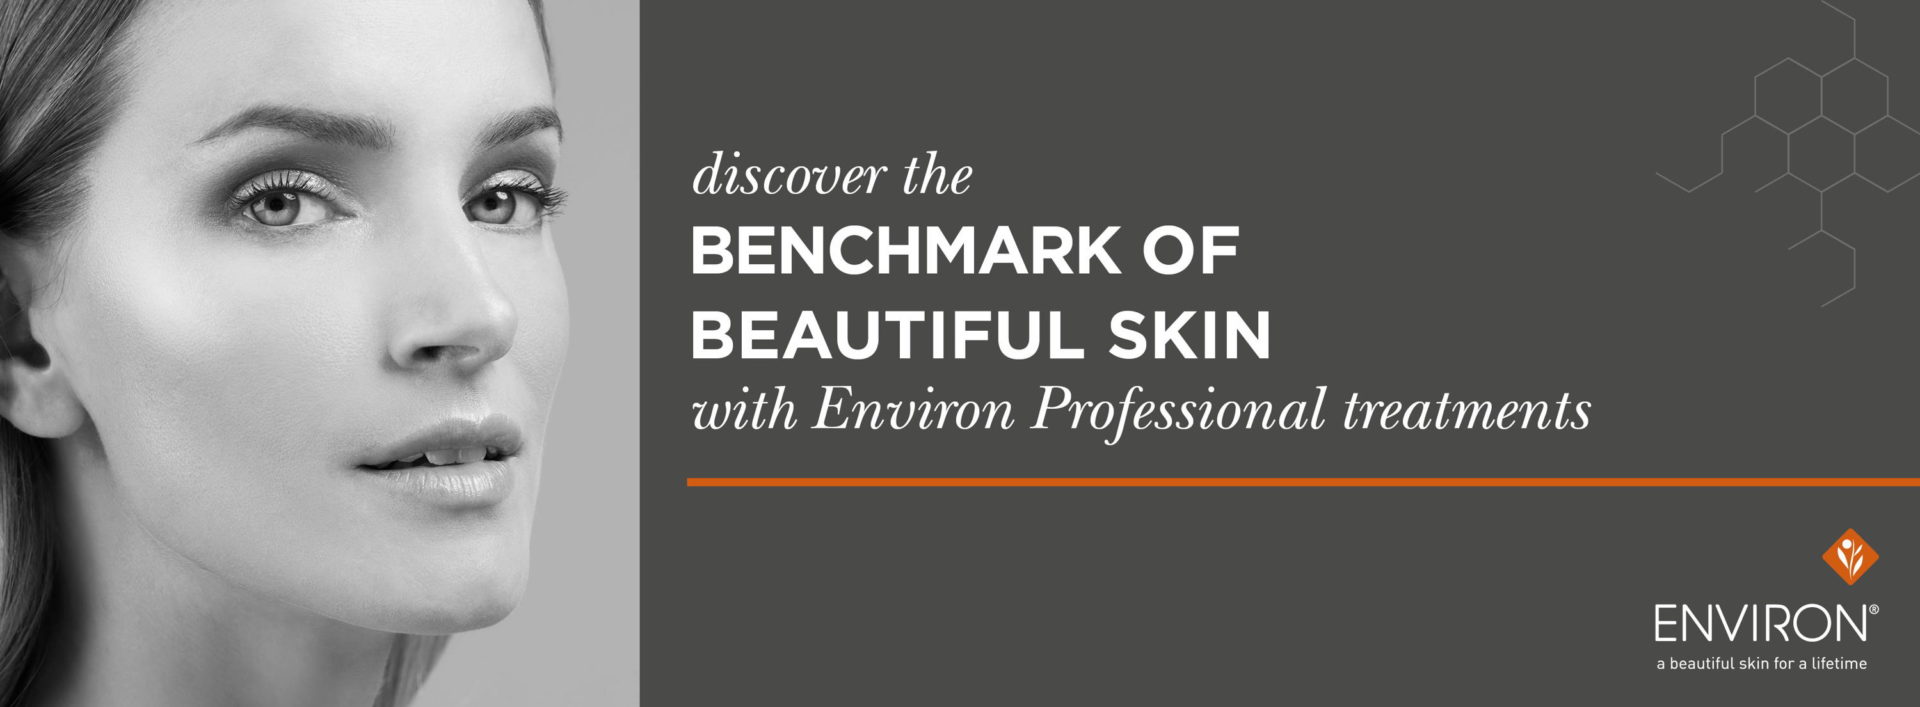 The benchmark of beautiful skin - Environ